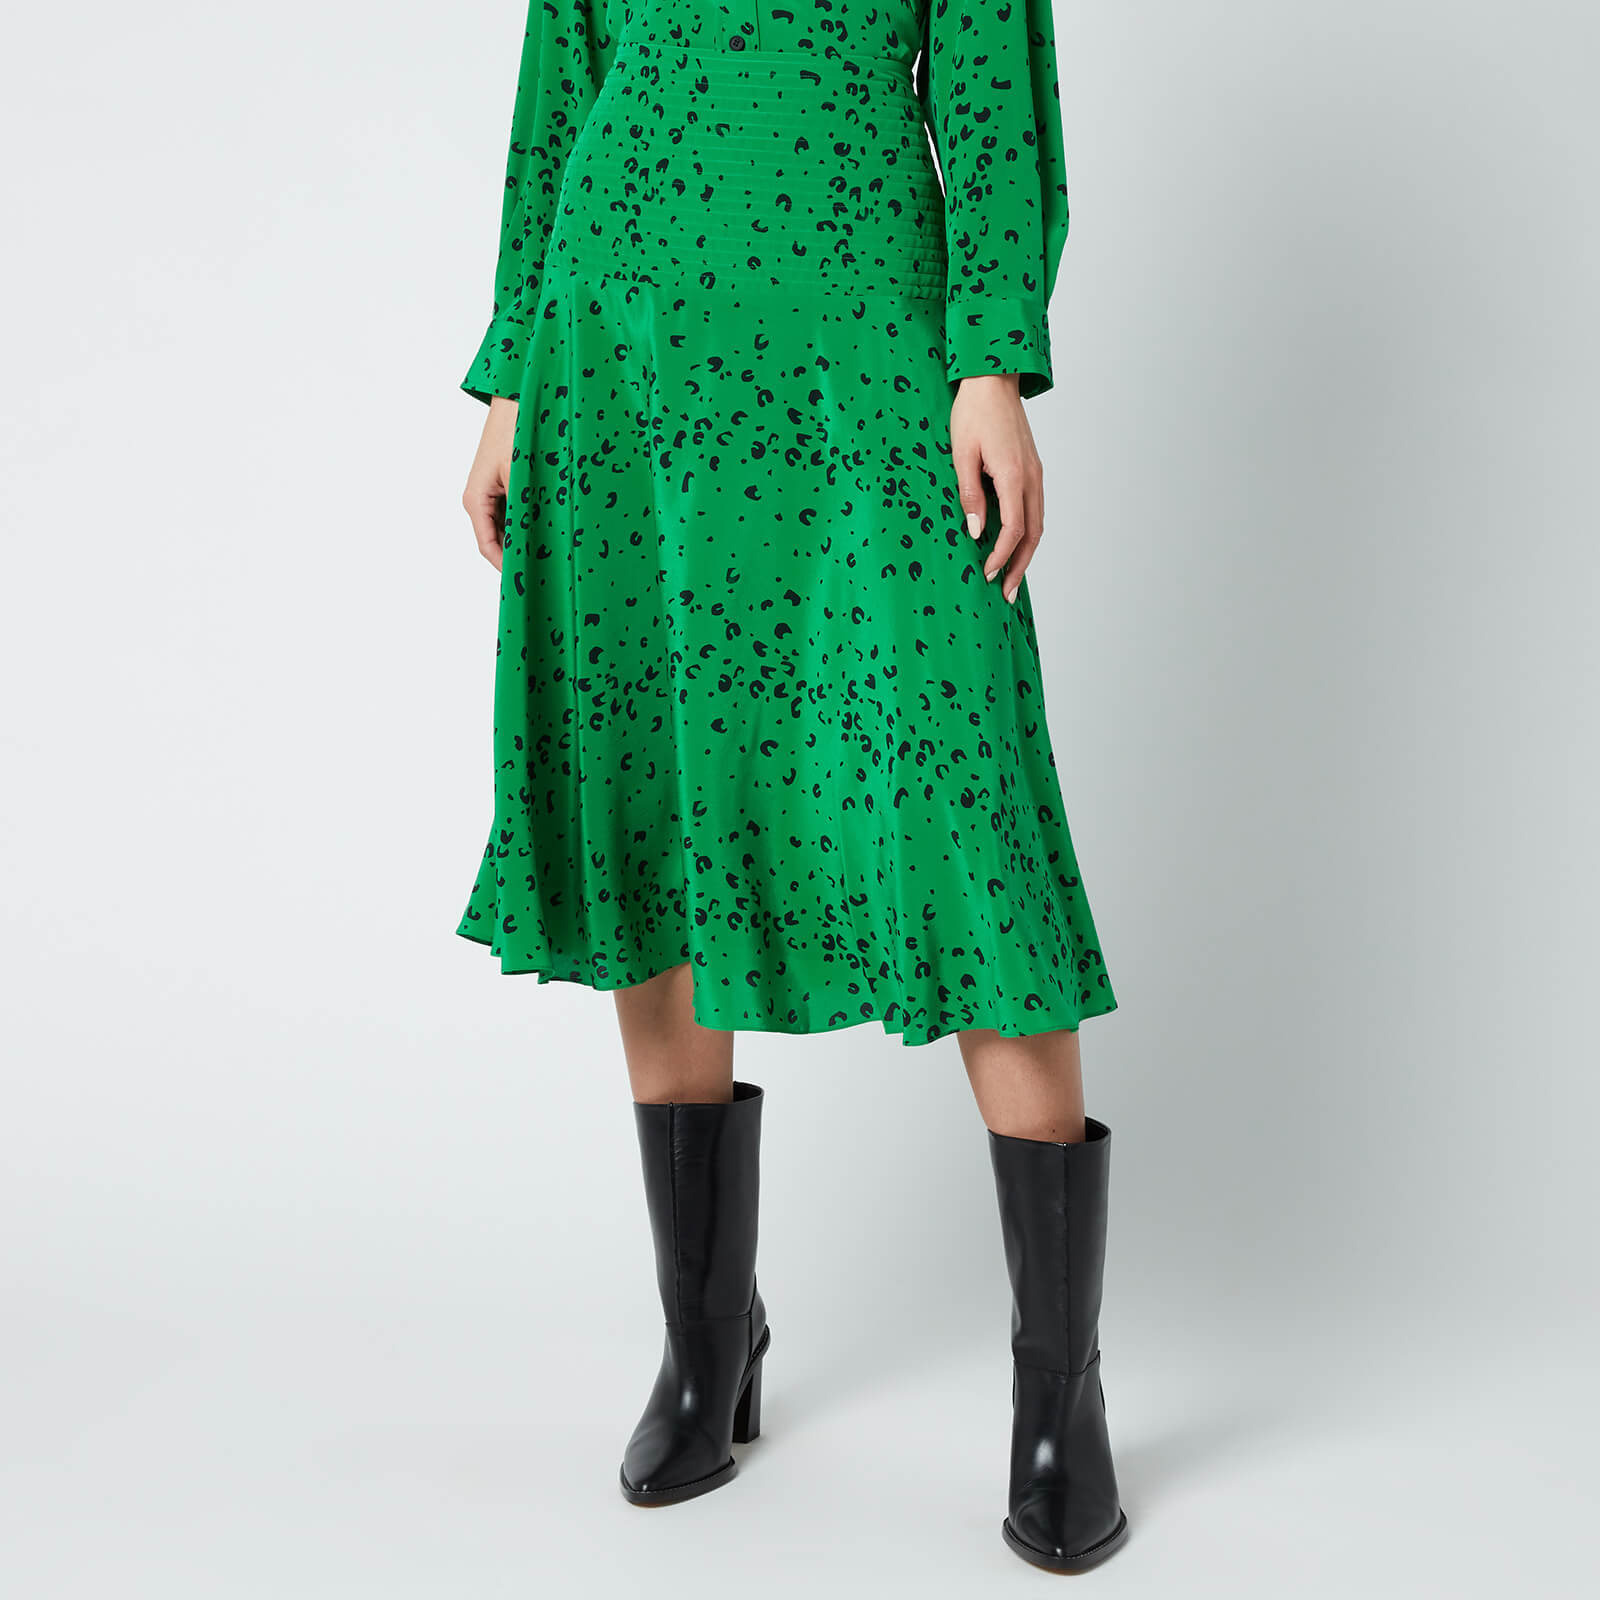 KENZO Women's Printed Midi Fluid Skirt - Green - EU 41/UK 12